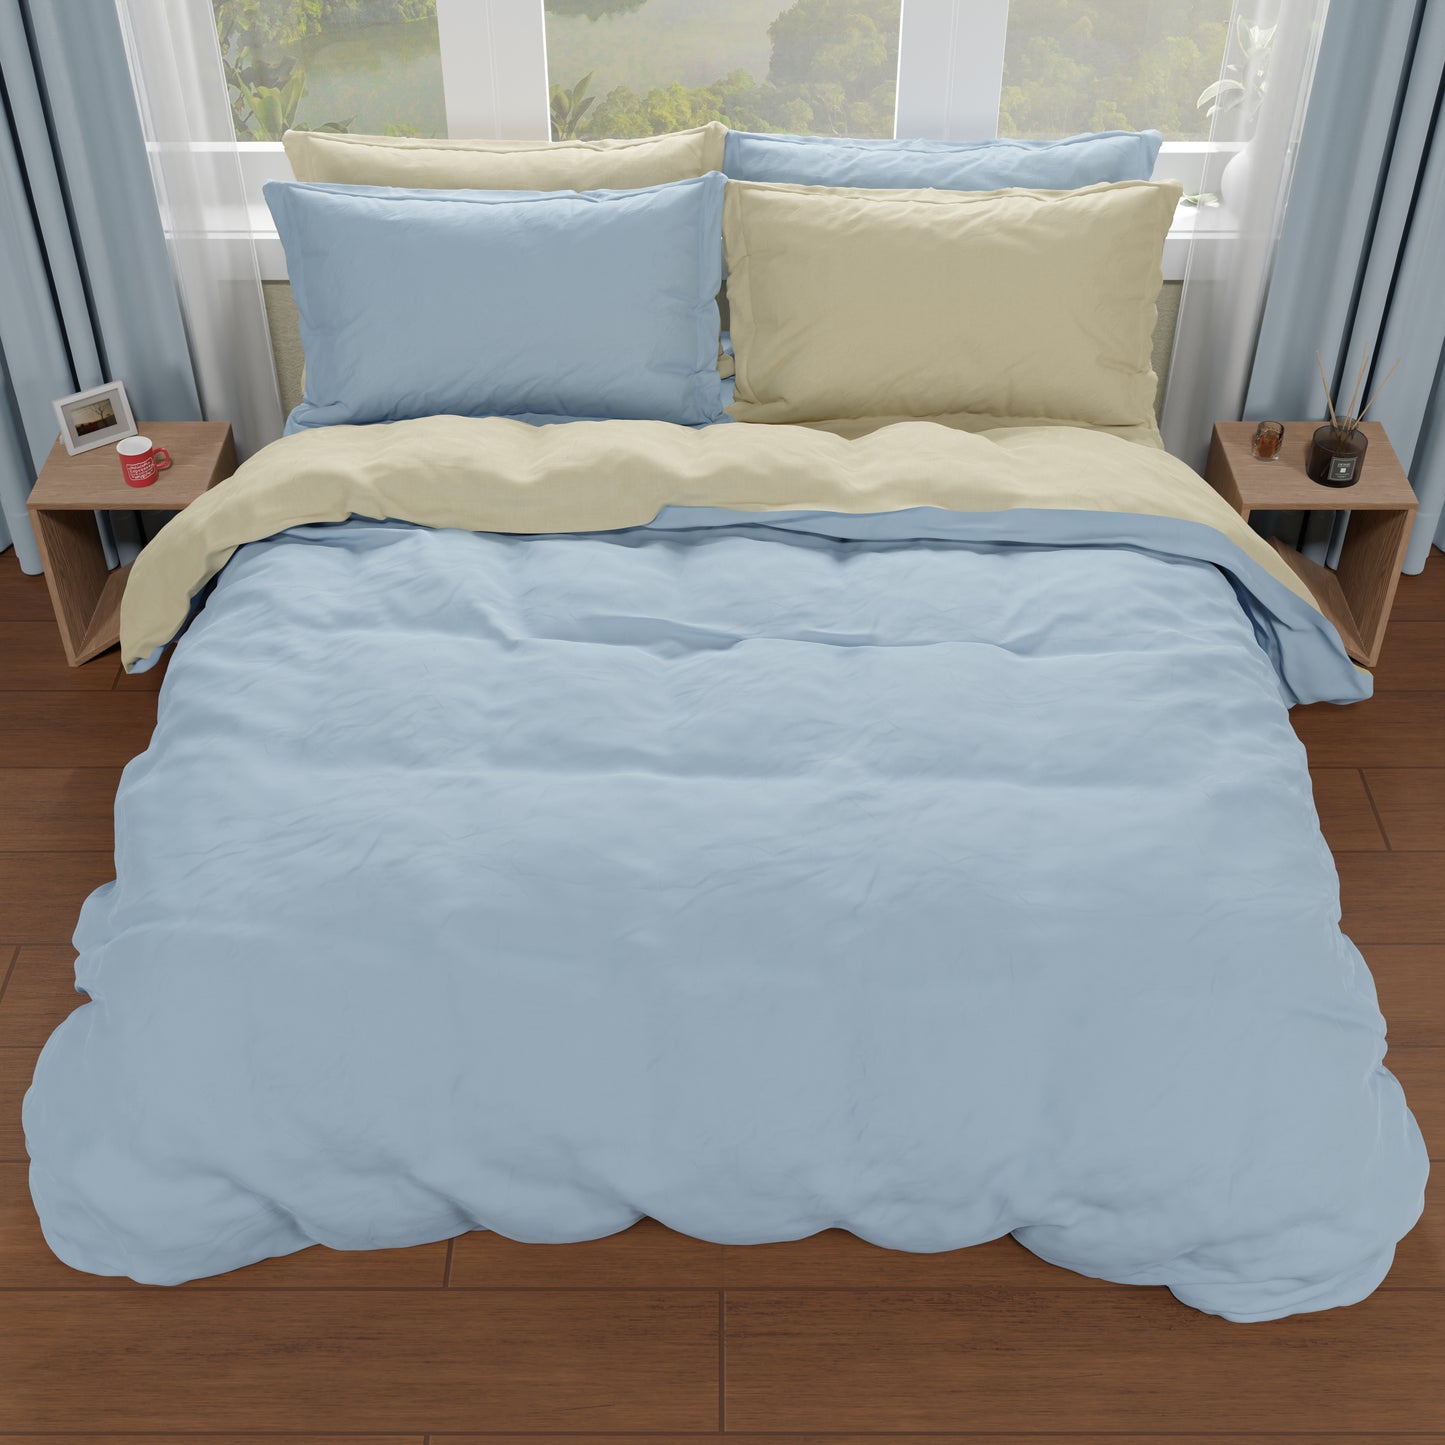 Double duvet cover, duvet cover and pillowcases, dove grey/light blue